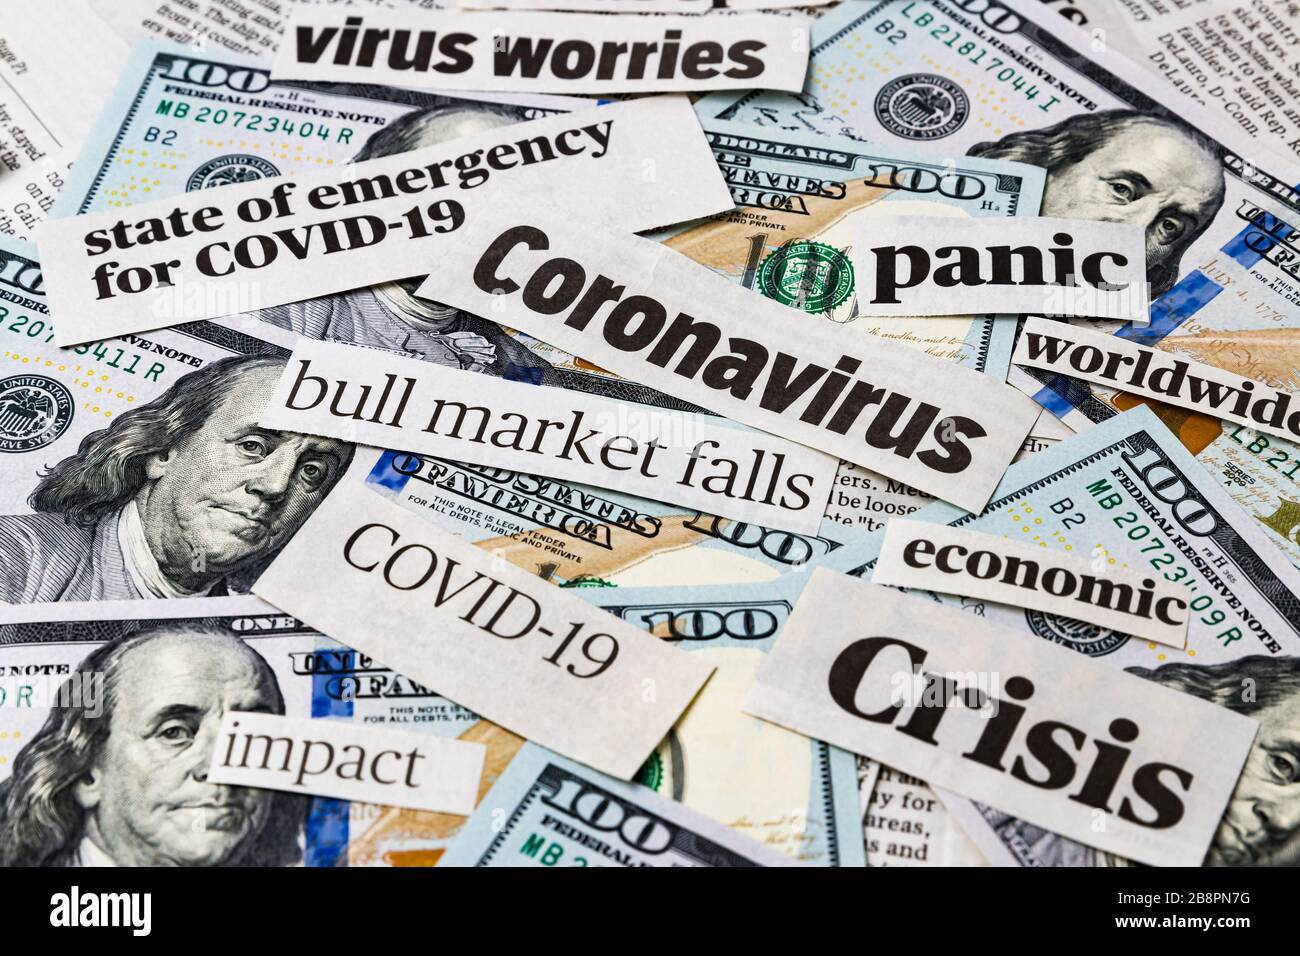 Covid-19 coronavirus news headlines on United States of America 100 dollar bills Financial impact, stock market decline, crash due to pandemic concept Stock Photo